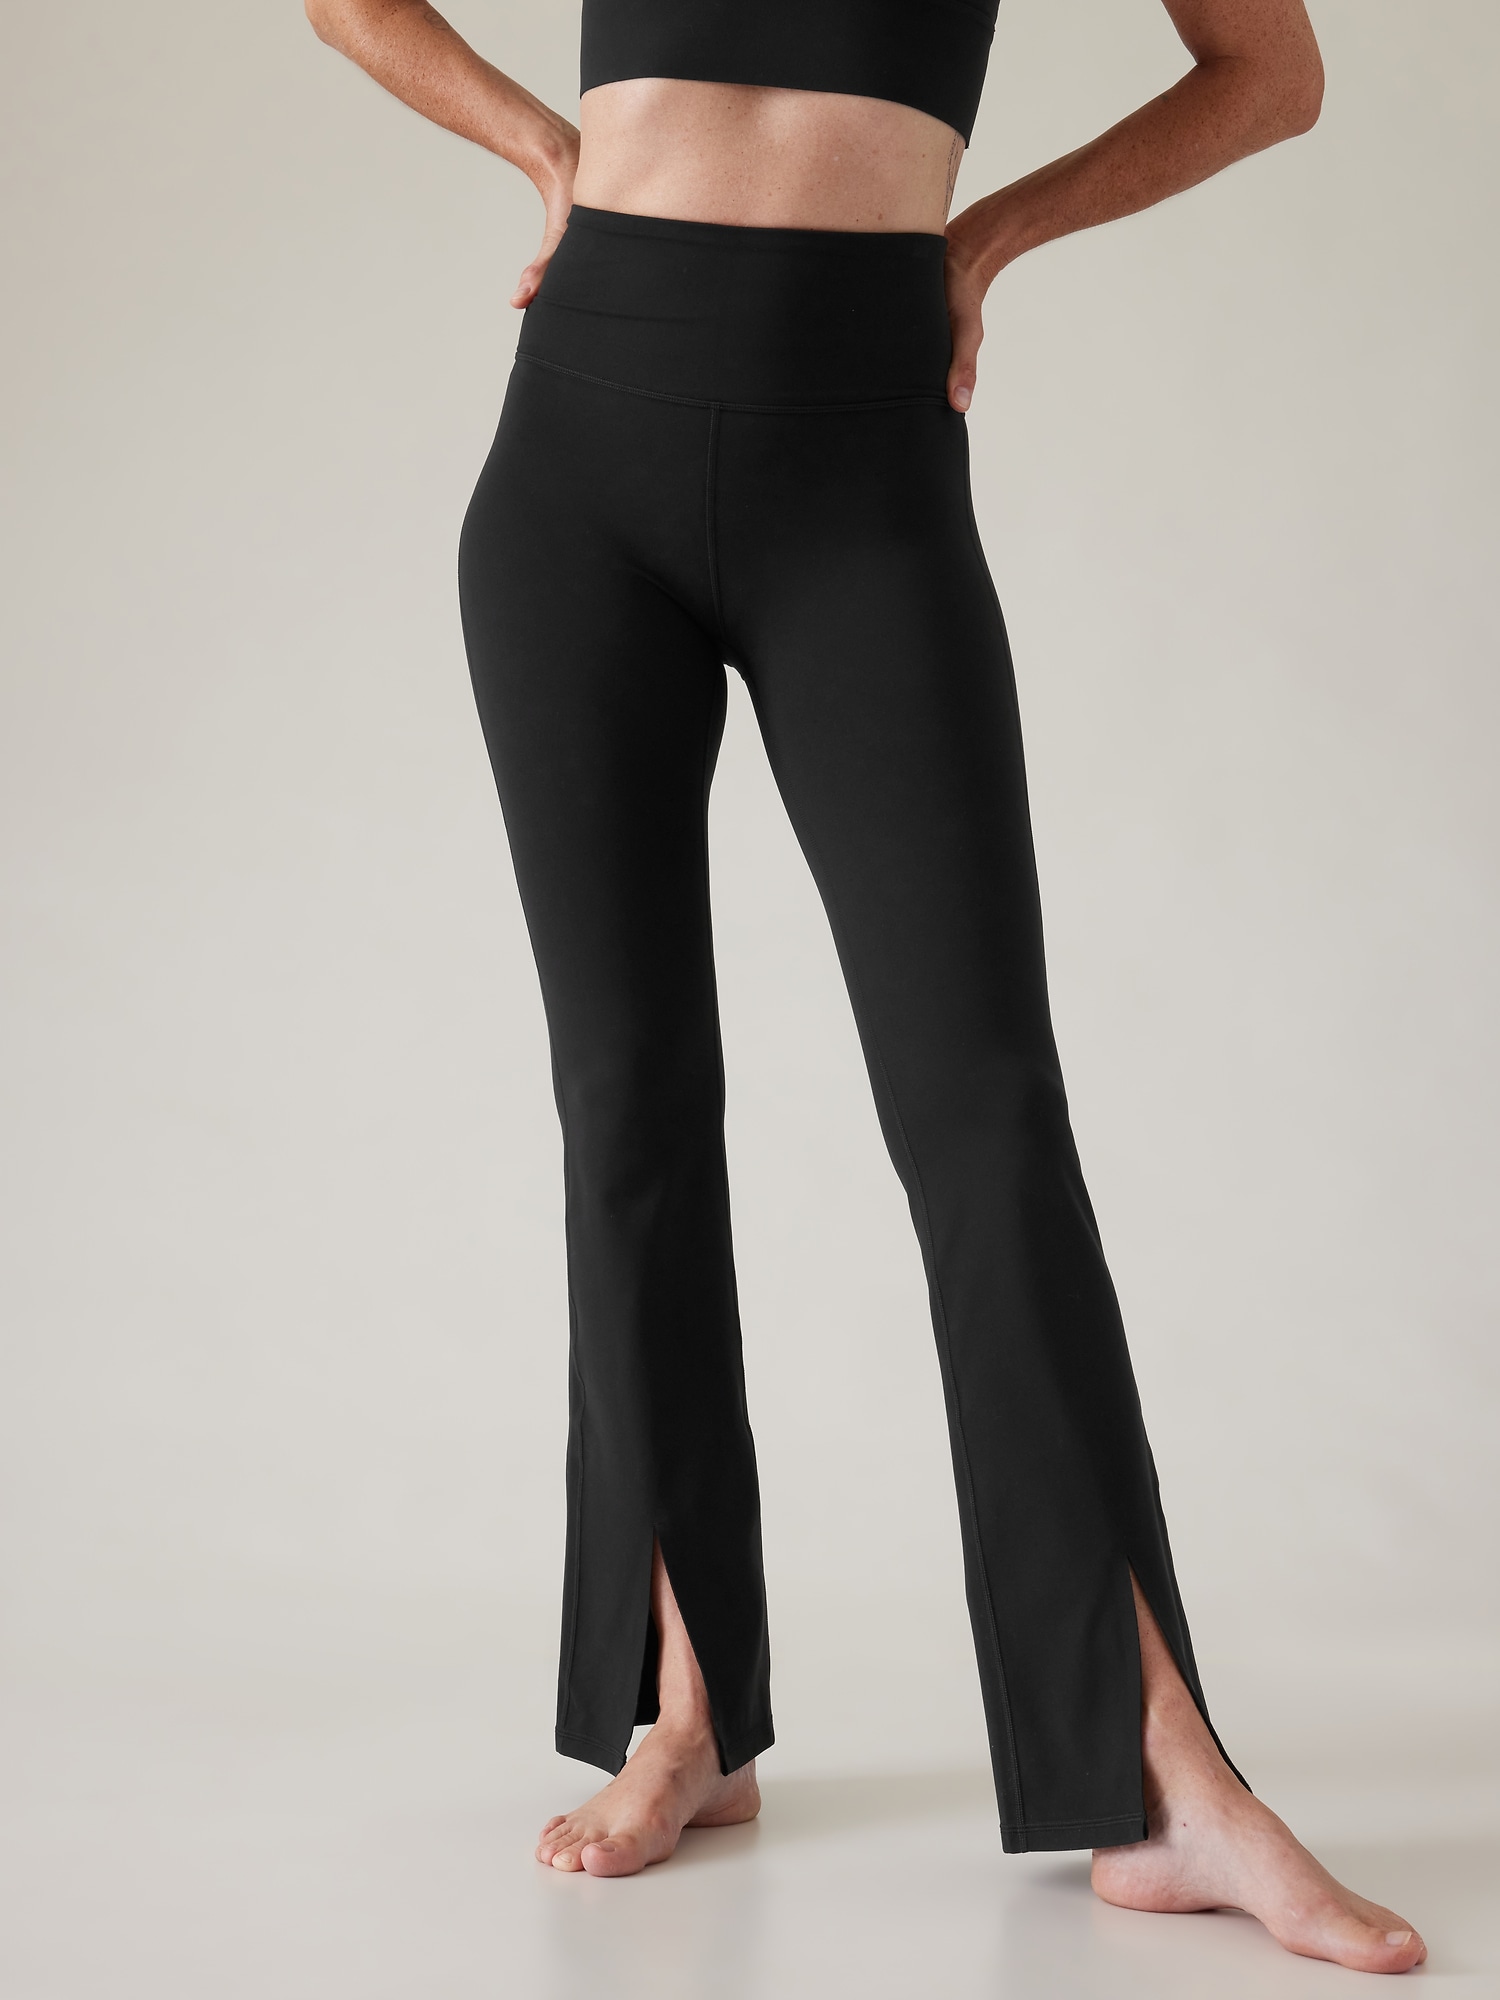 Athleta Elation Women's Flare Pants -Black, Size Large/Tall